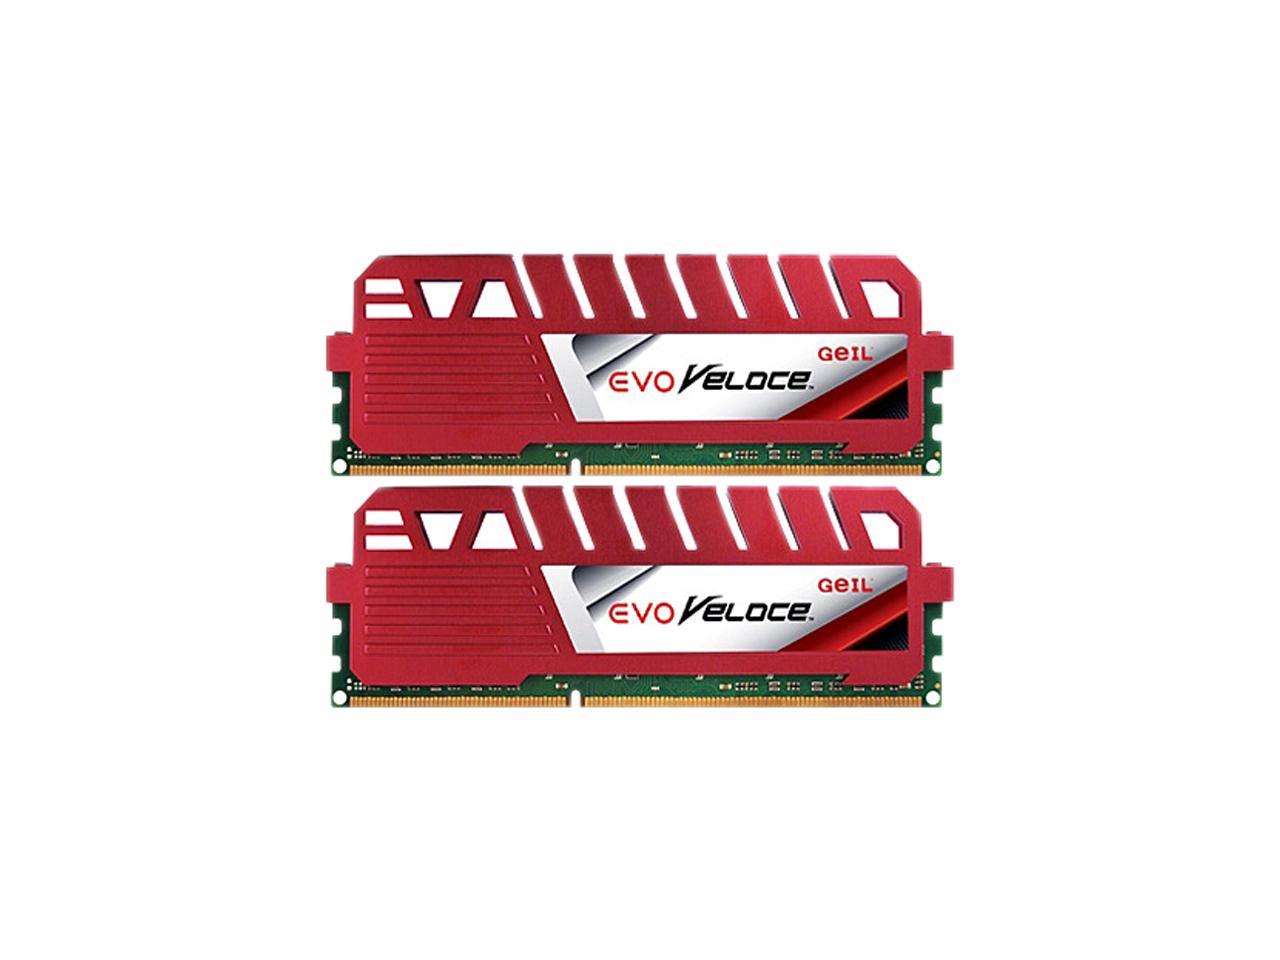 GeIL 8GB (2Pcs Kit x 4GB/ea) 240-Pin DDR3 DDR3 1866 (PC3 14900) Desktop Memory Model GEV38GB1866C10DC